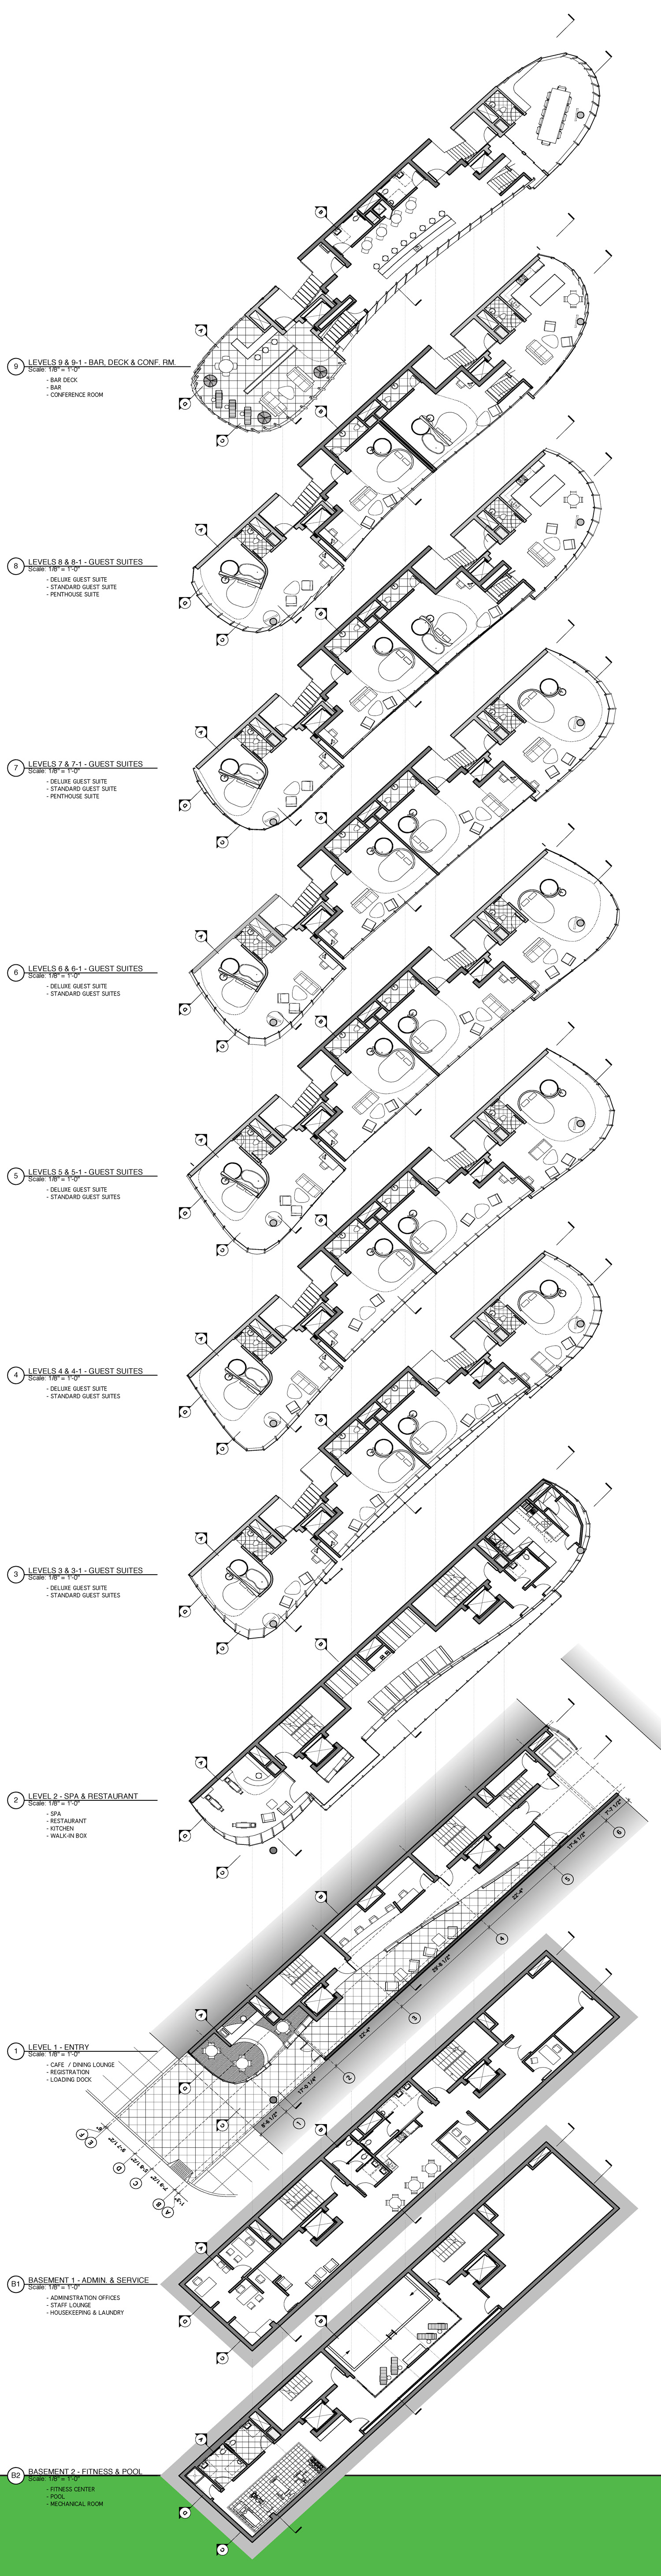 Da Hotel-8-Diagrams-Floor Plans.jpg